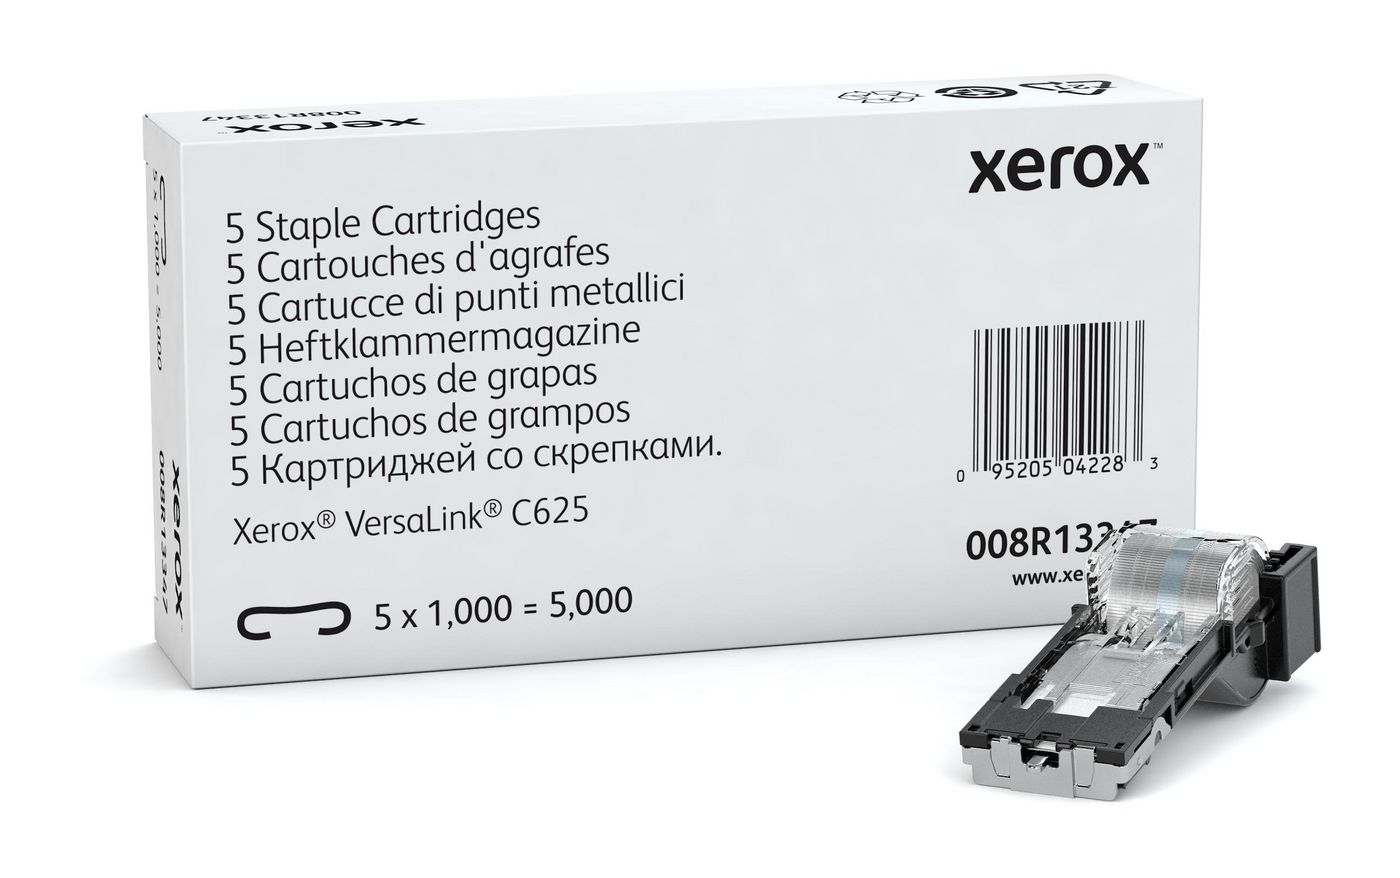 XEROX Staple Cartridge Refill